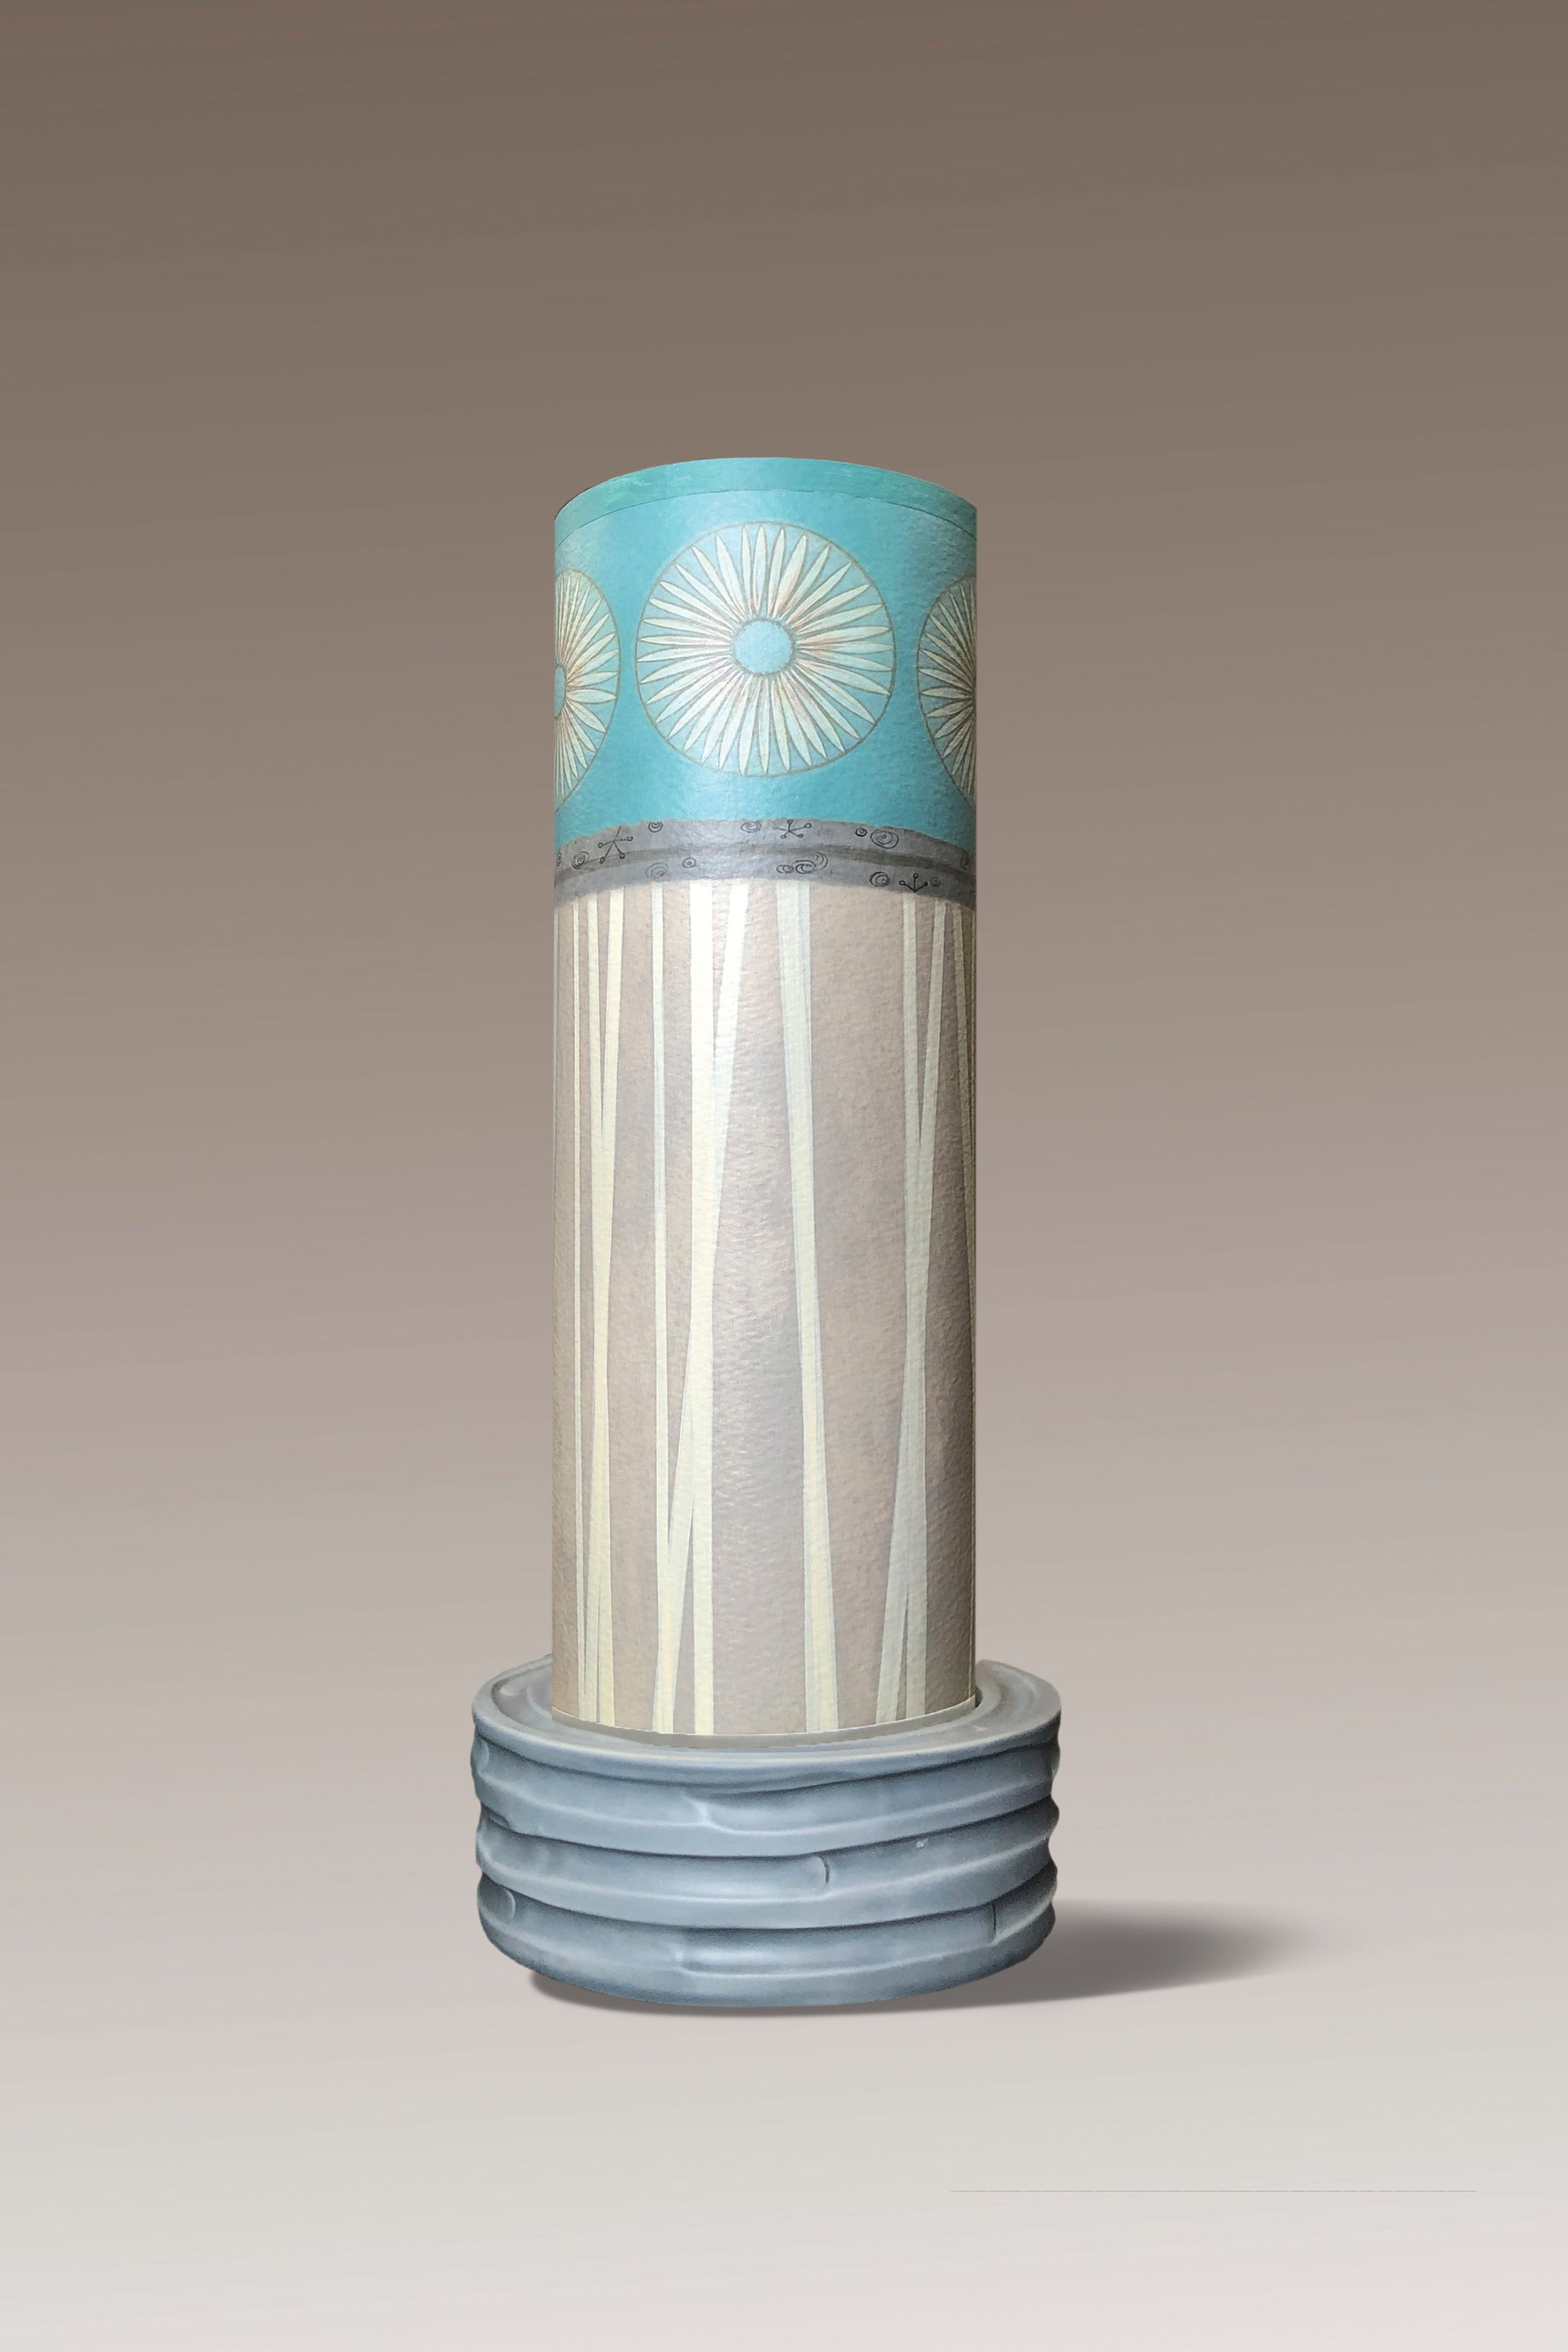 Janna Ugone & Co Luminaires Ceramic Luminaire Accent Lamp with Pool Shade